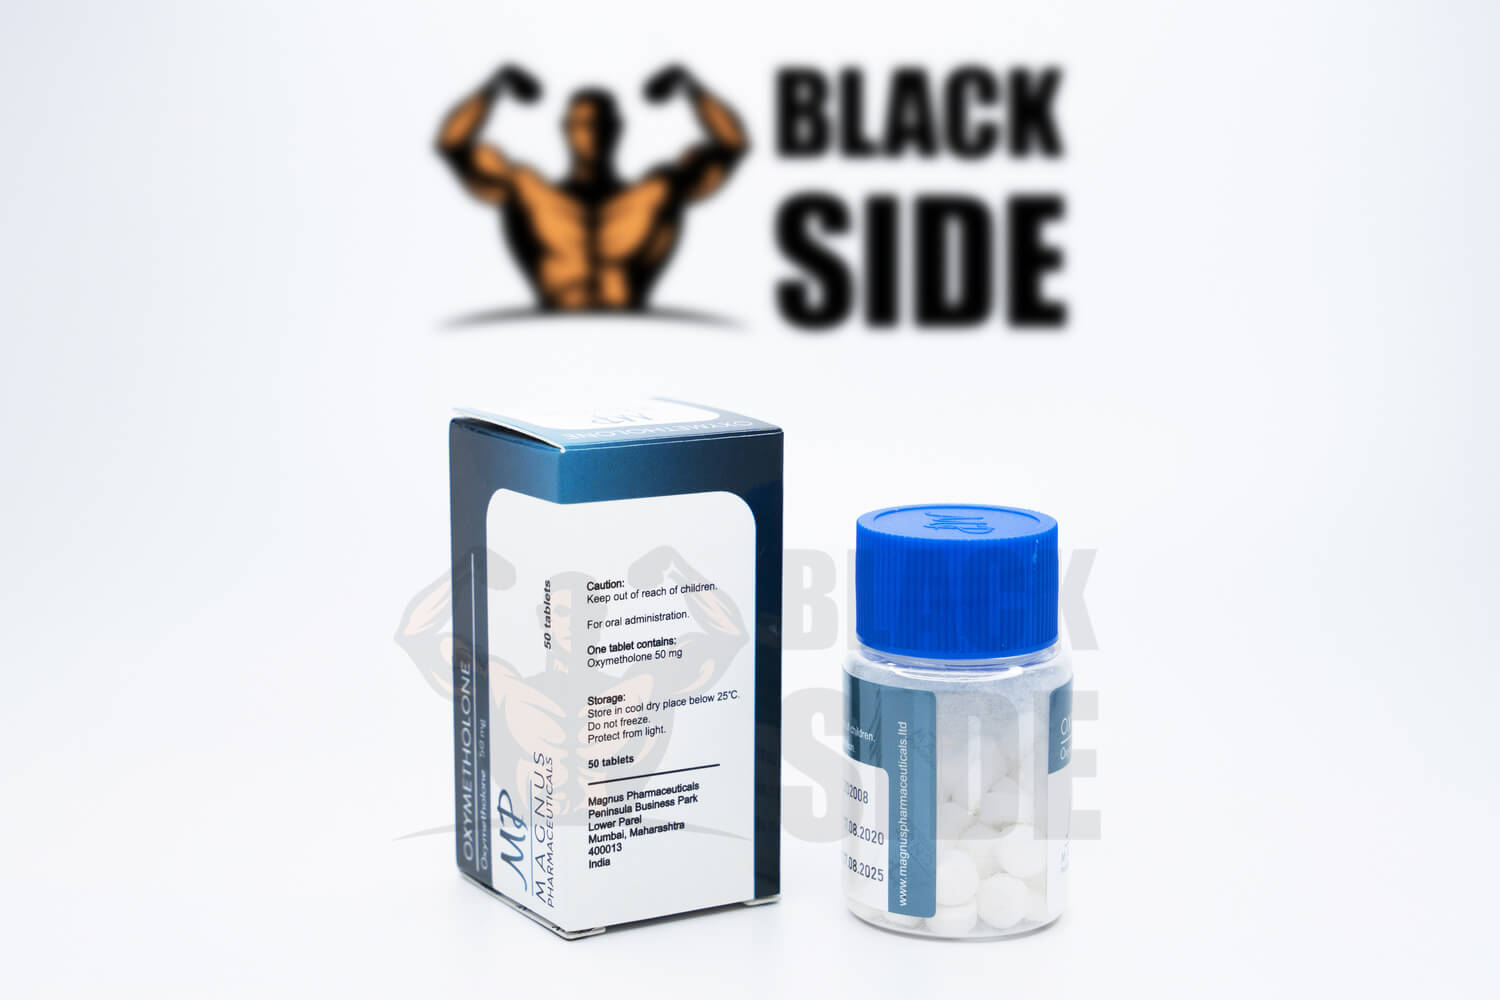 Oxymetholone Оксиметолон Magnus Pharmaceuticals | 50 табл - 50 мг/табл - Black Side